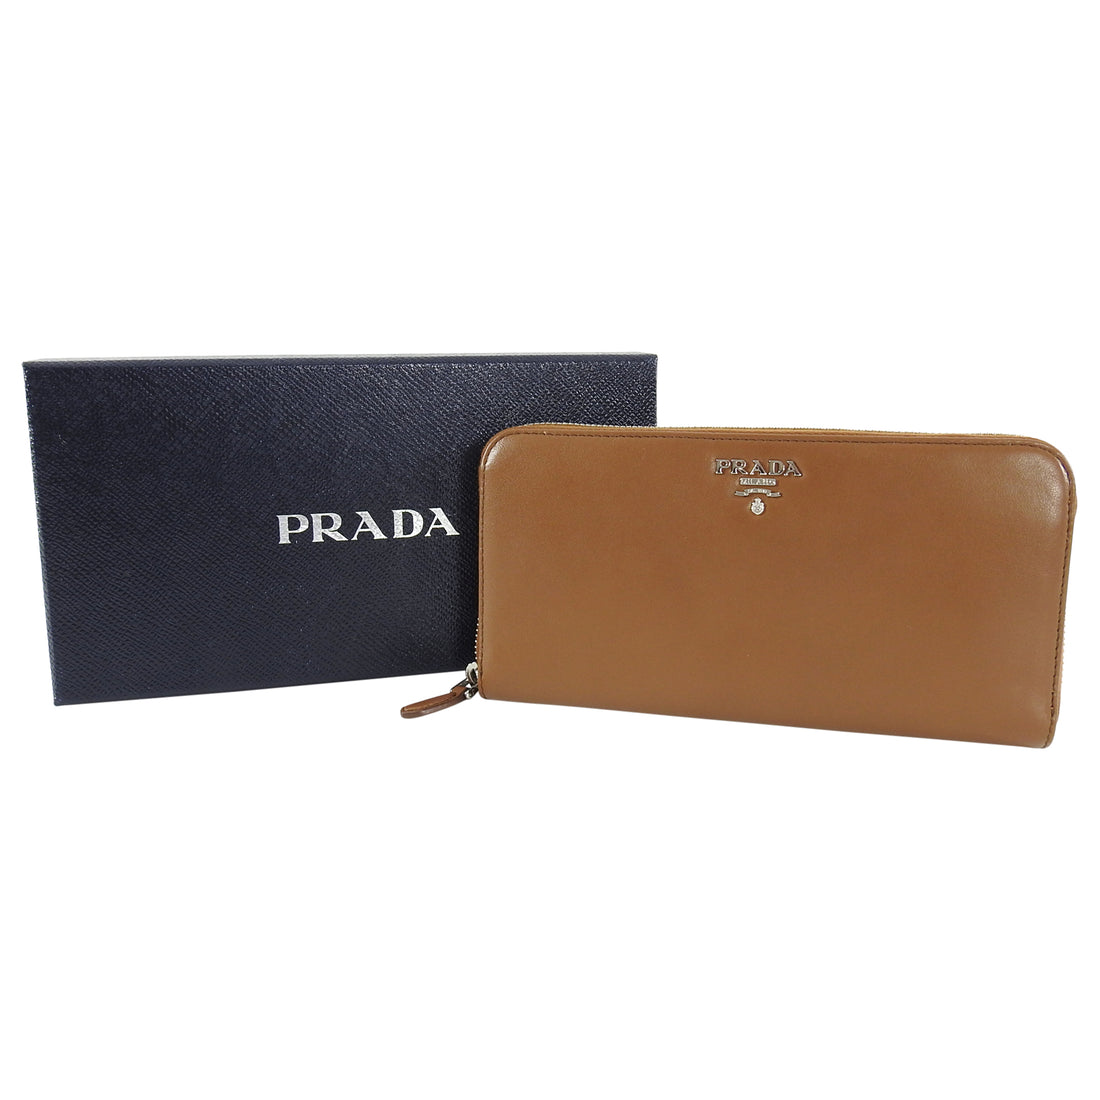 Prada Saffiano Leather Wallet-on-Chain, Brown (Cannella